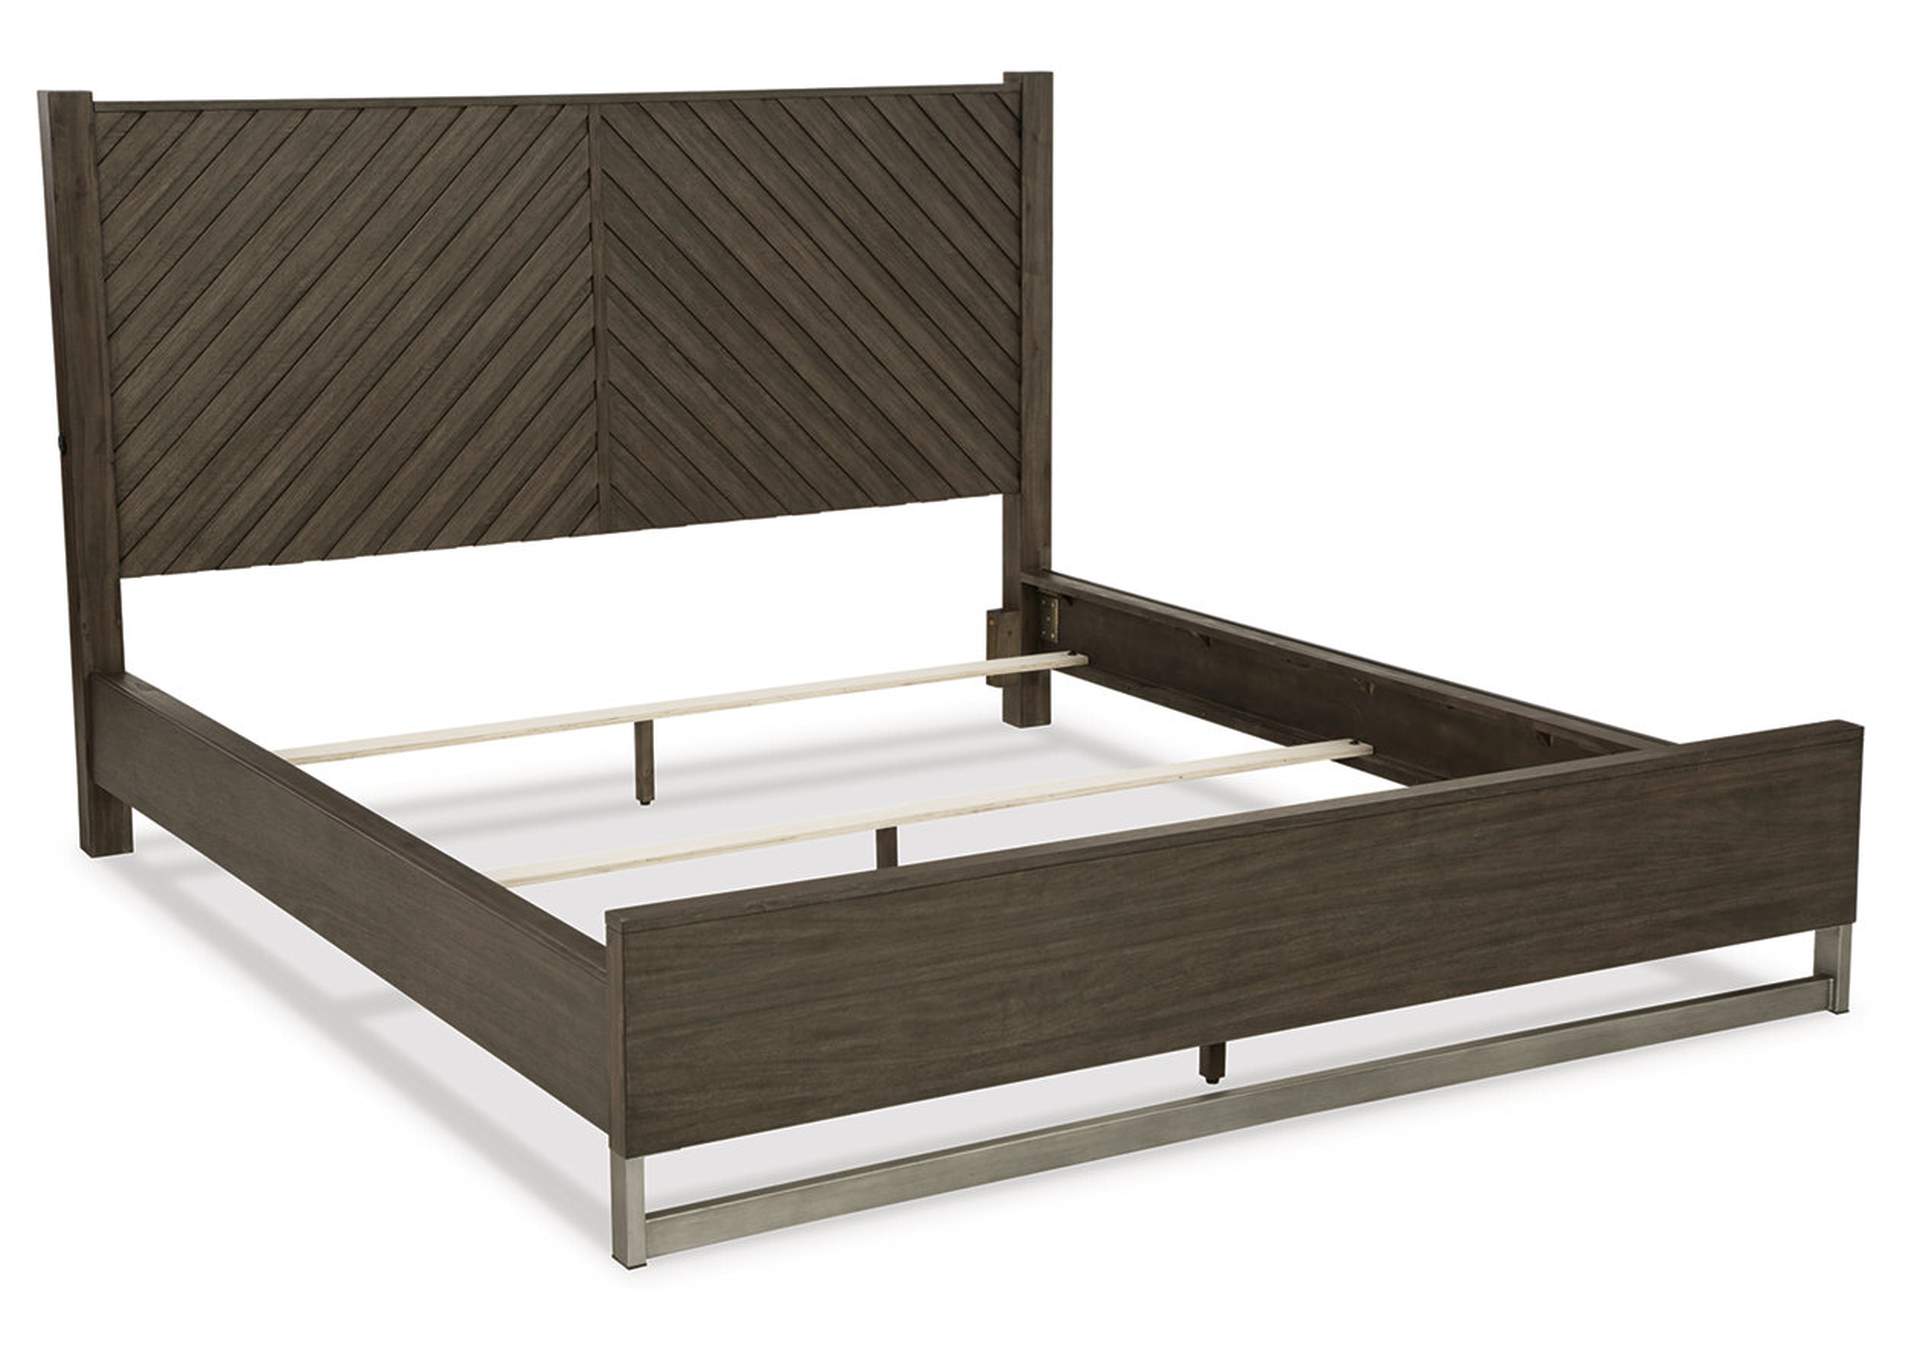 Arkenton King Panel Bed with Dresser,Ashley